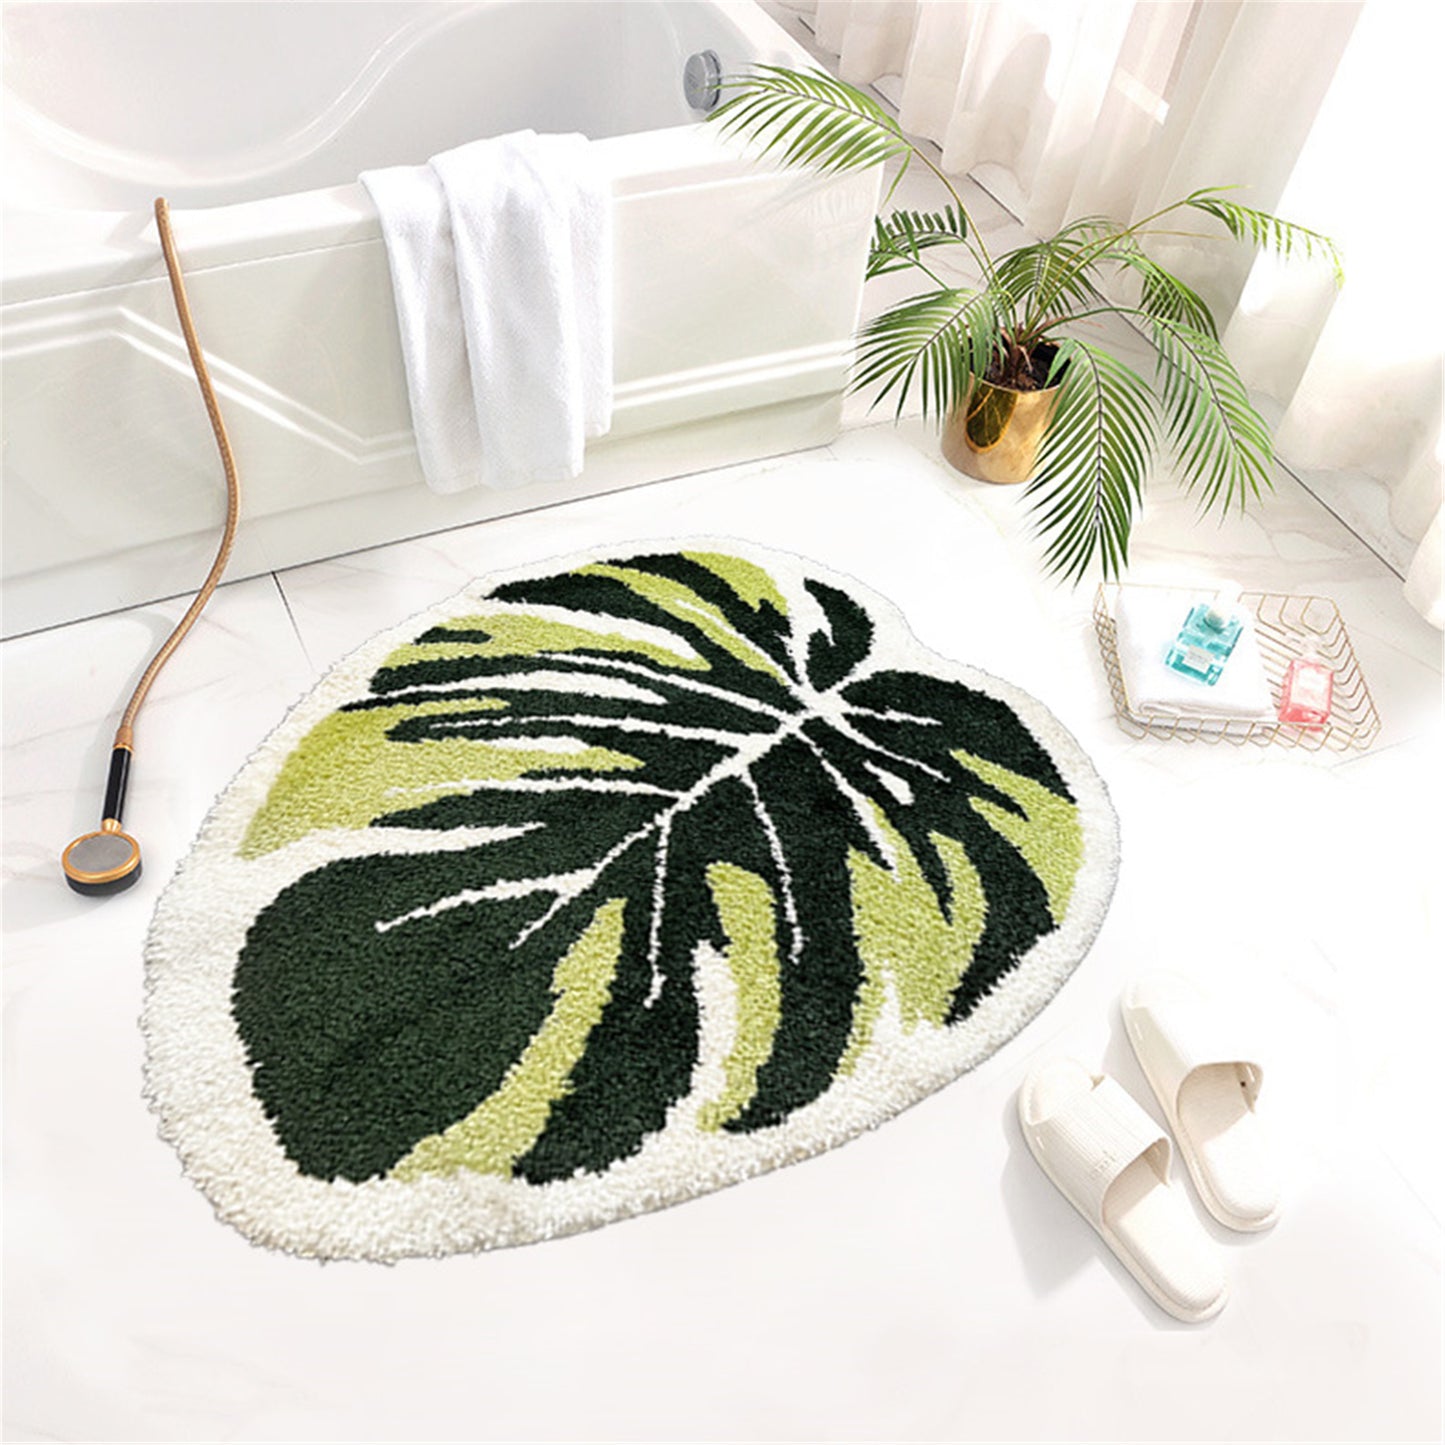 Monstera-leaf shape bath mat colorful cute bathroom decor